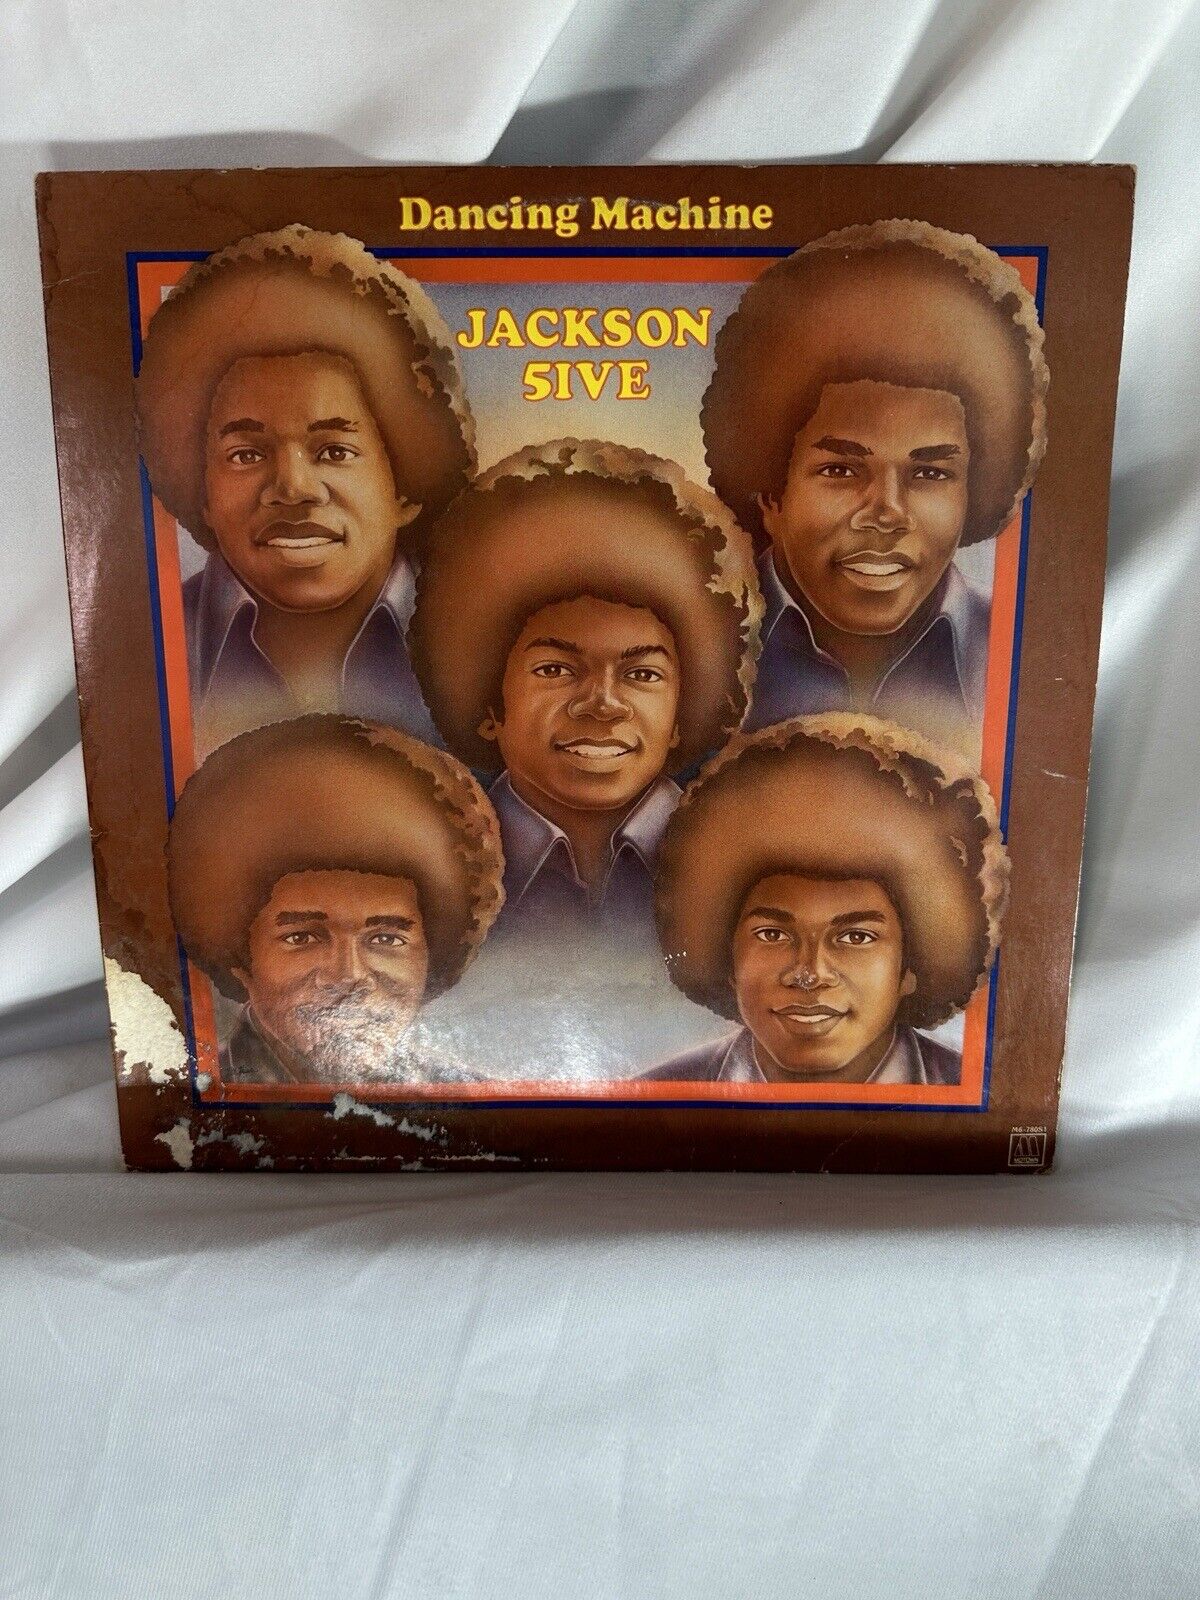 JACKSON FIVE 5 ~ DANCING MACHINE LP (1974) MOTOWN M6-780S1 STEREO R&B SOUL